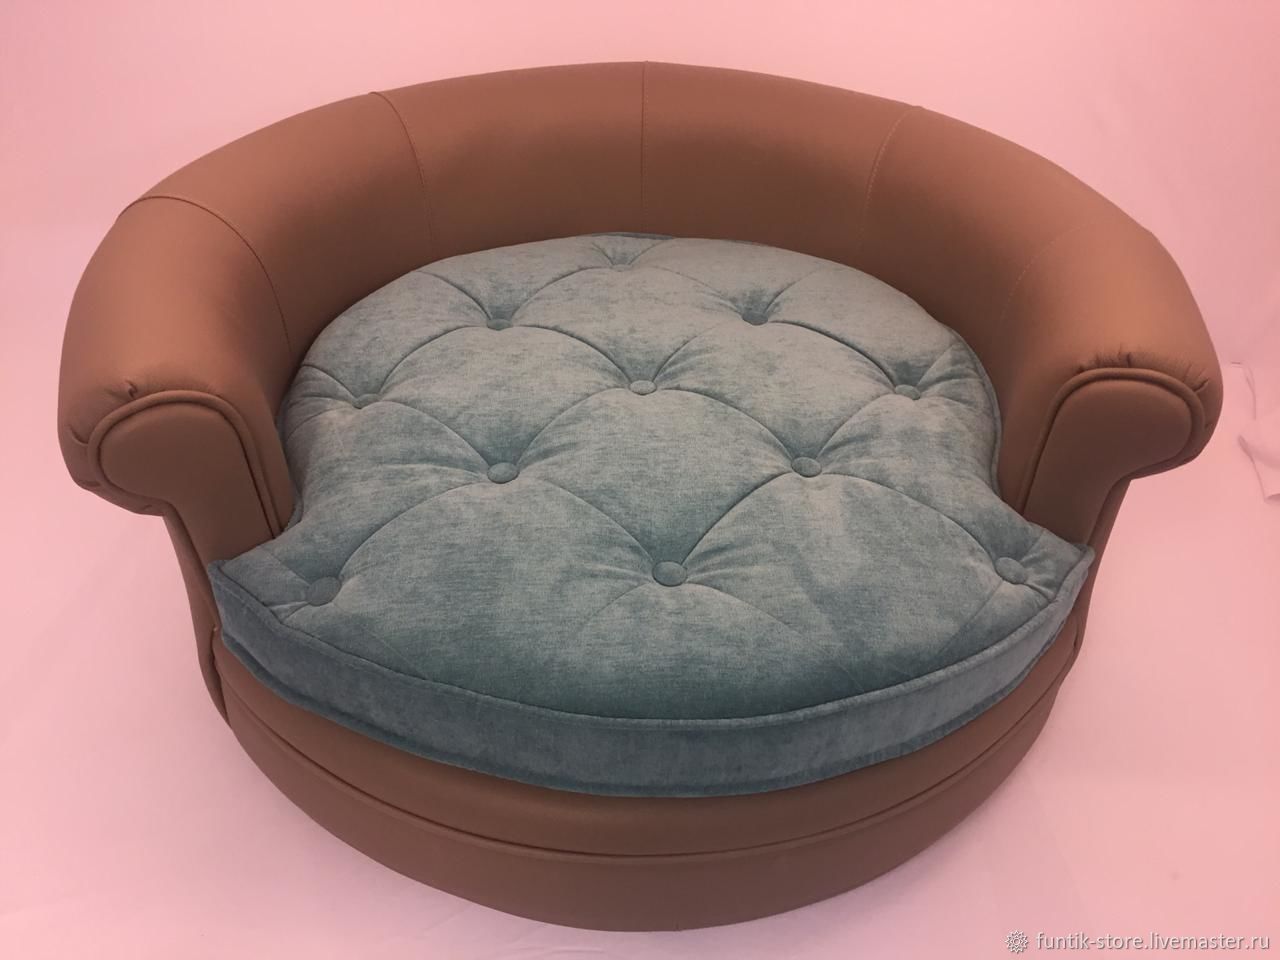 Маленький диван для кошки